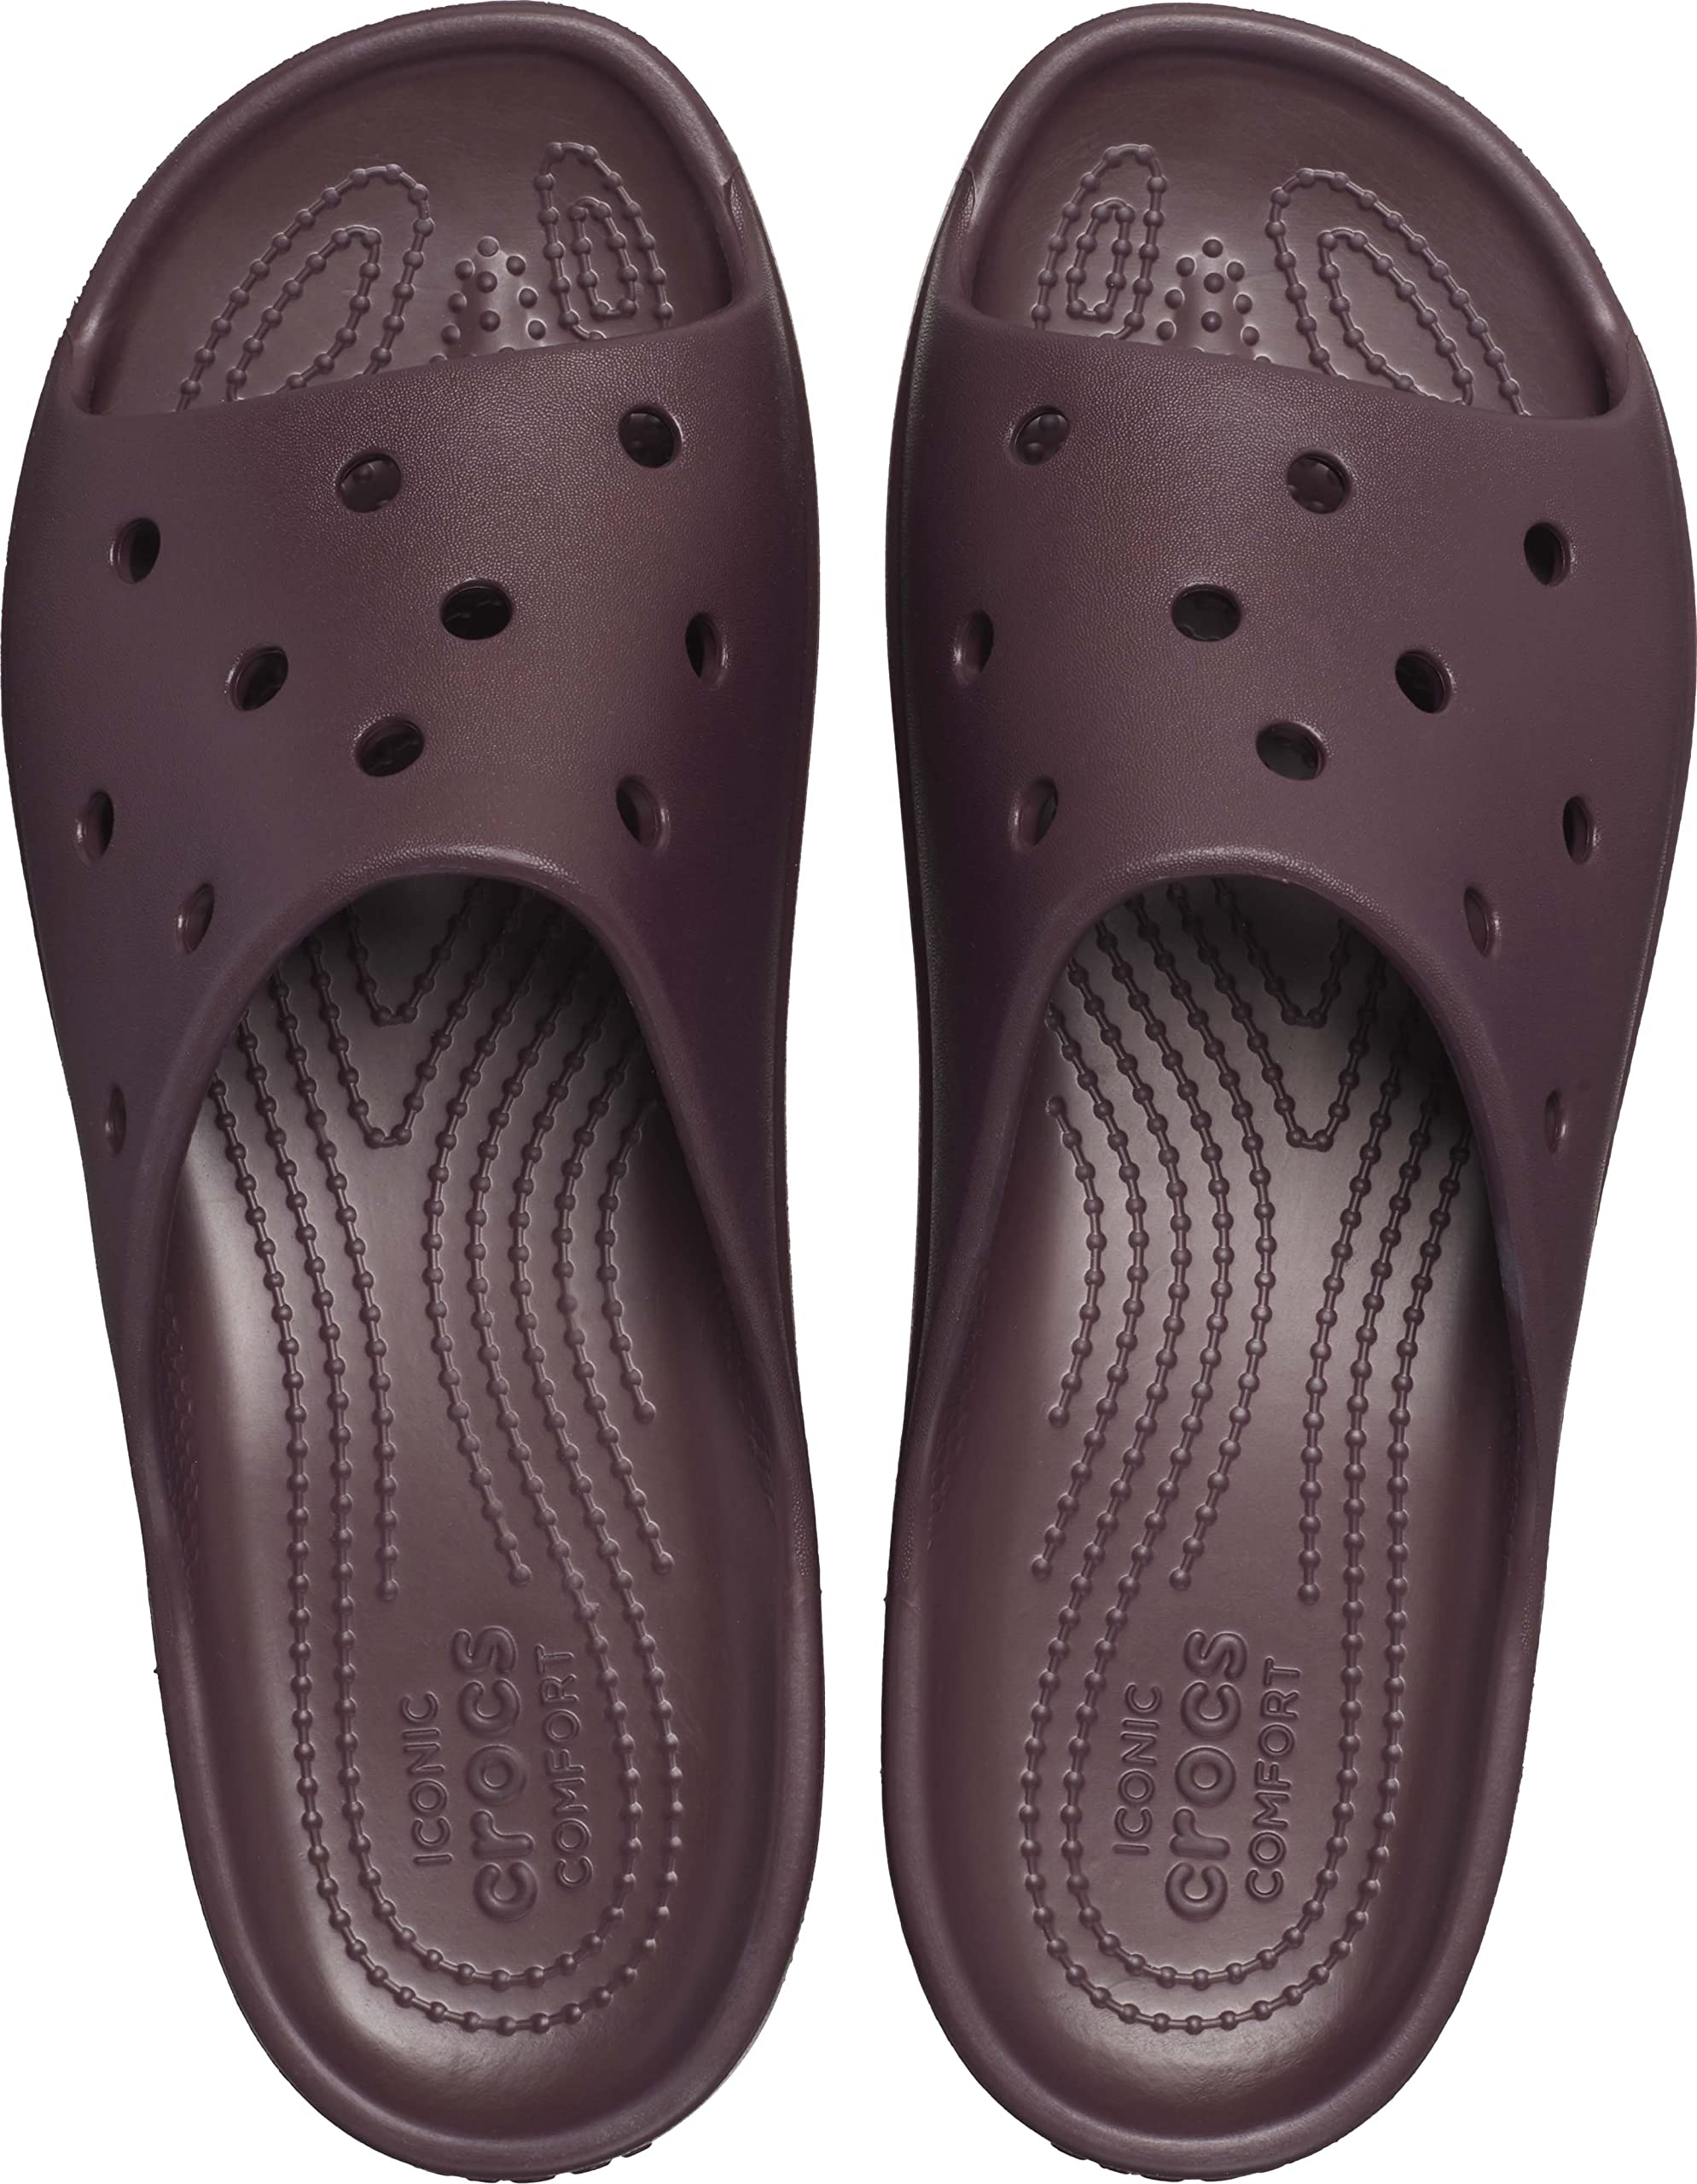 Crocs womens Classic Platform Slide | Platform Sandals